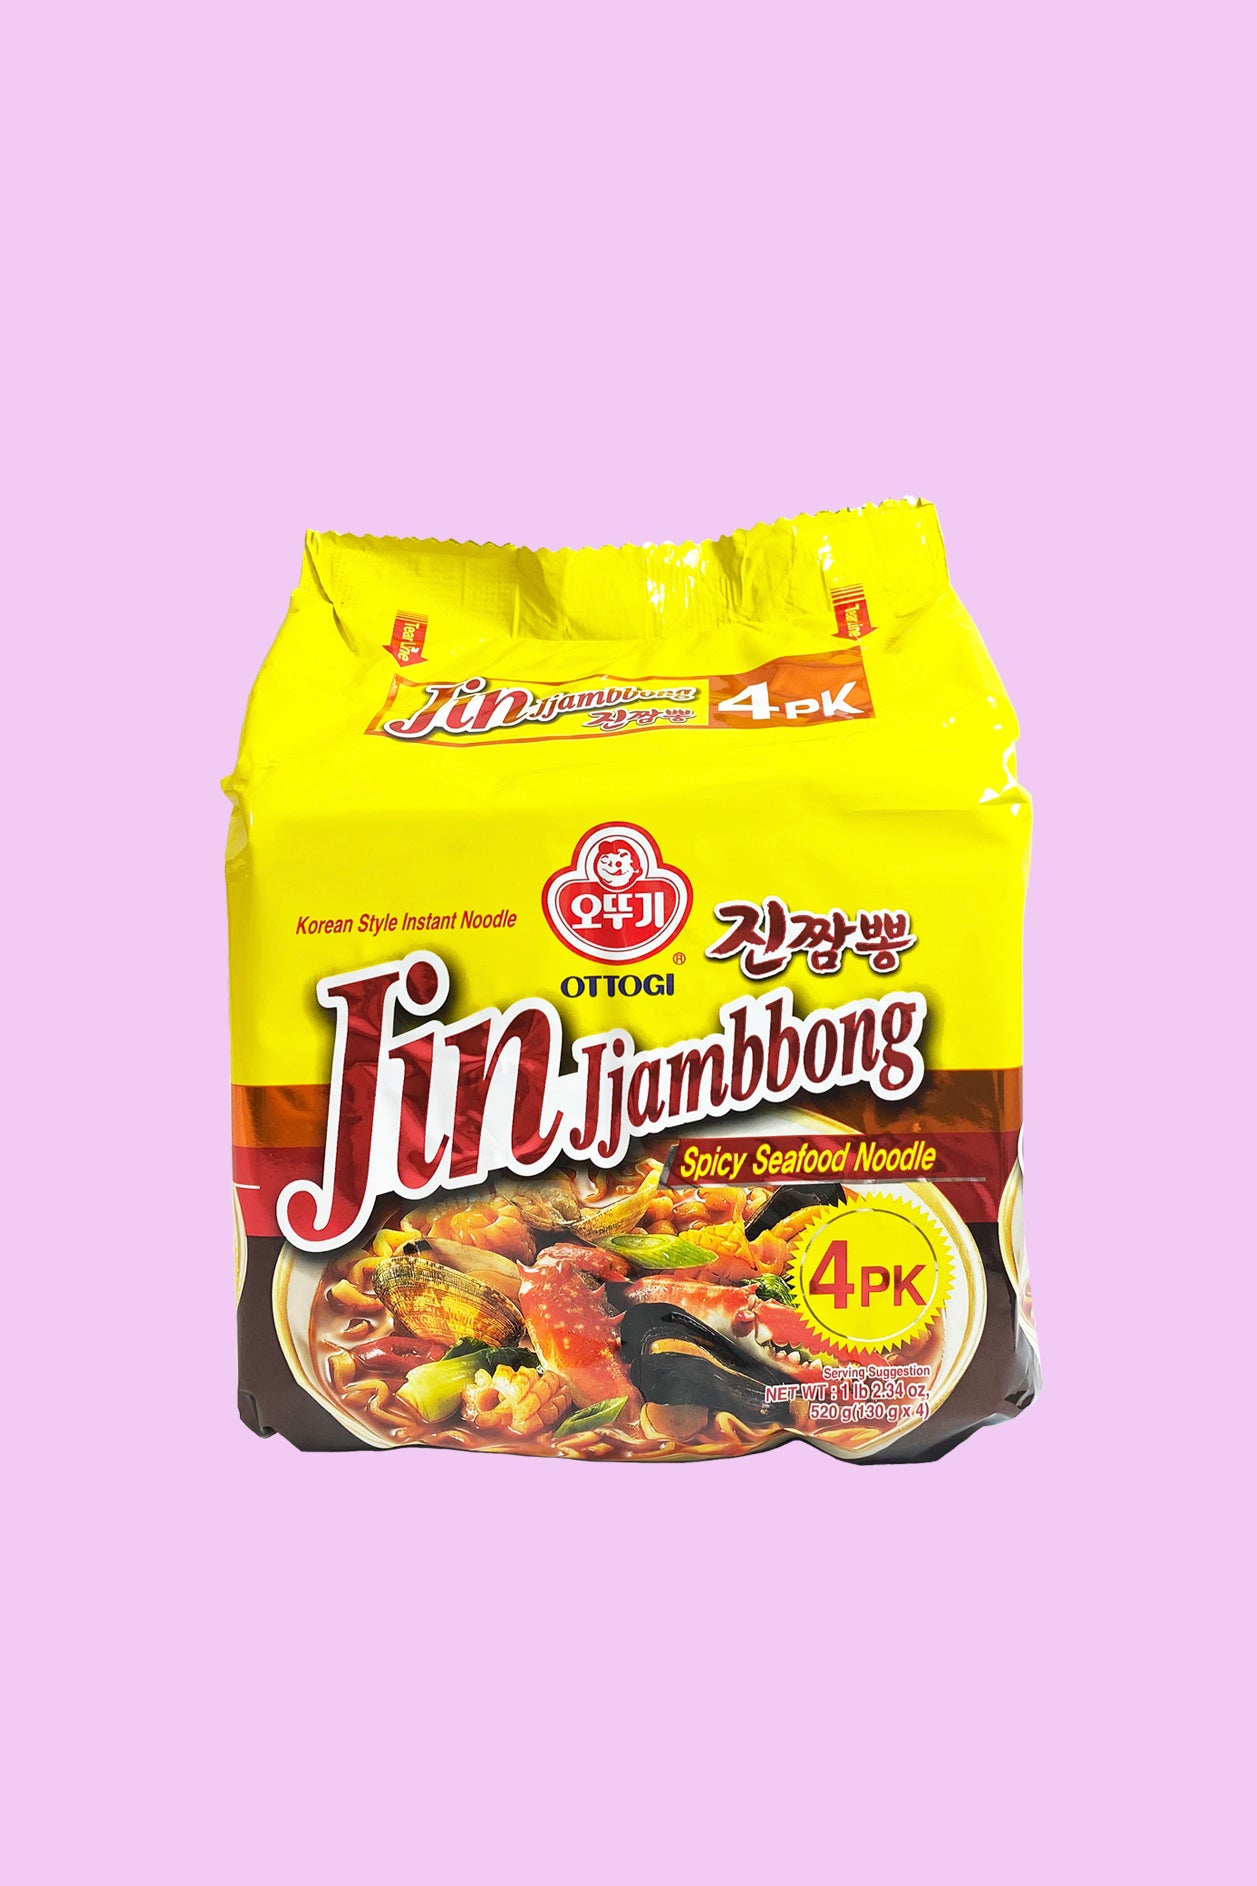 Jin Jjambbong Spicy Seafood Noodle 4PK